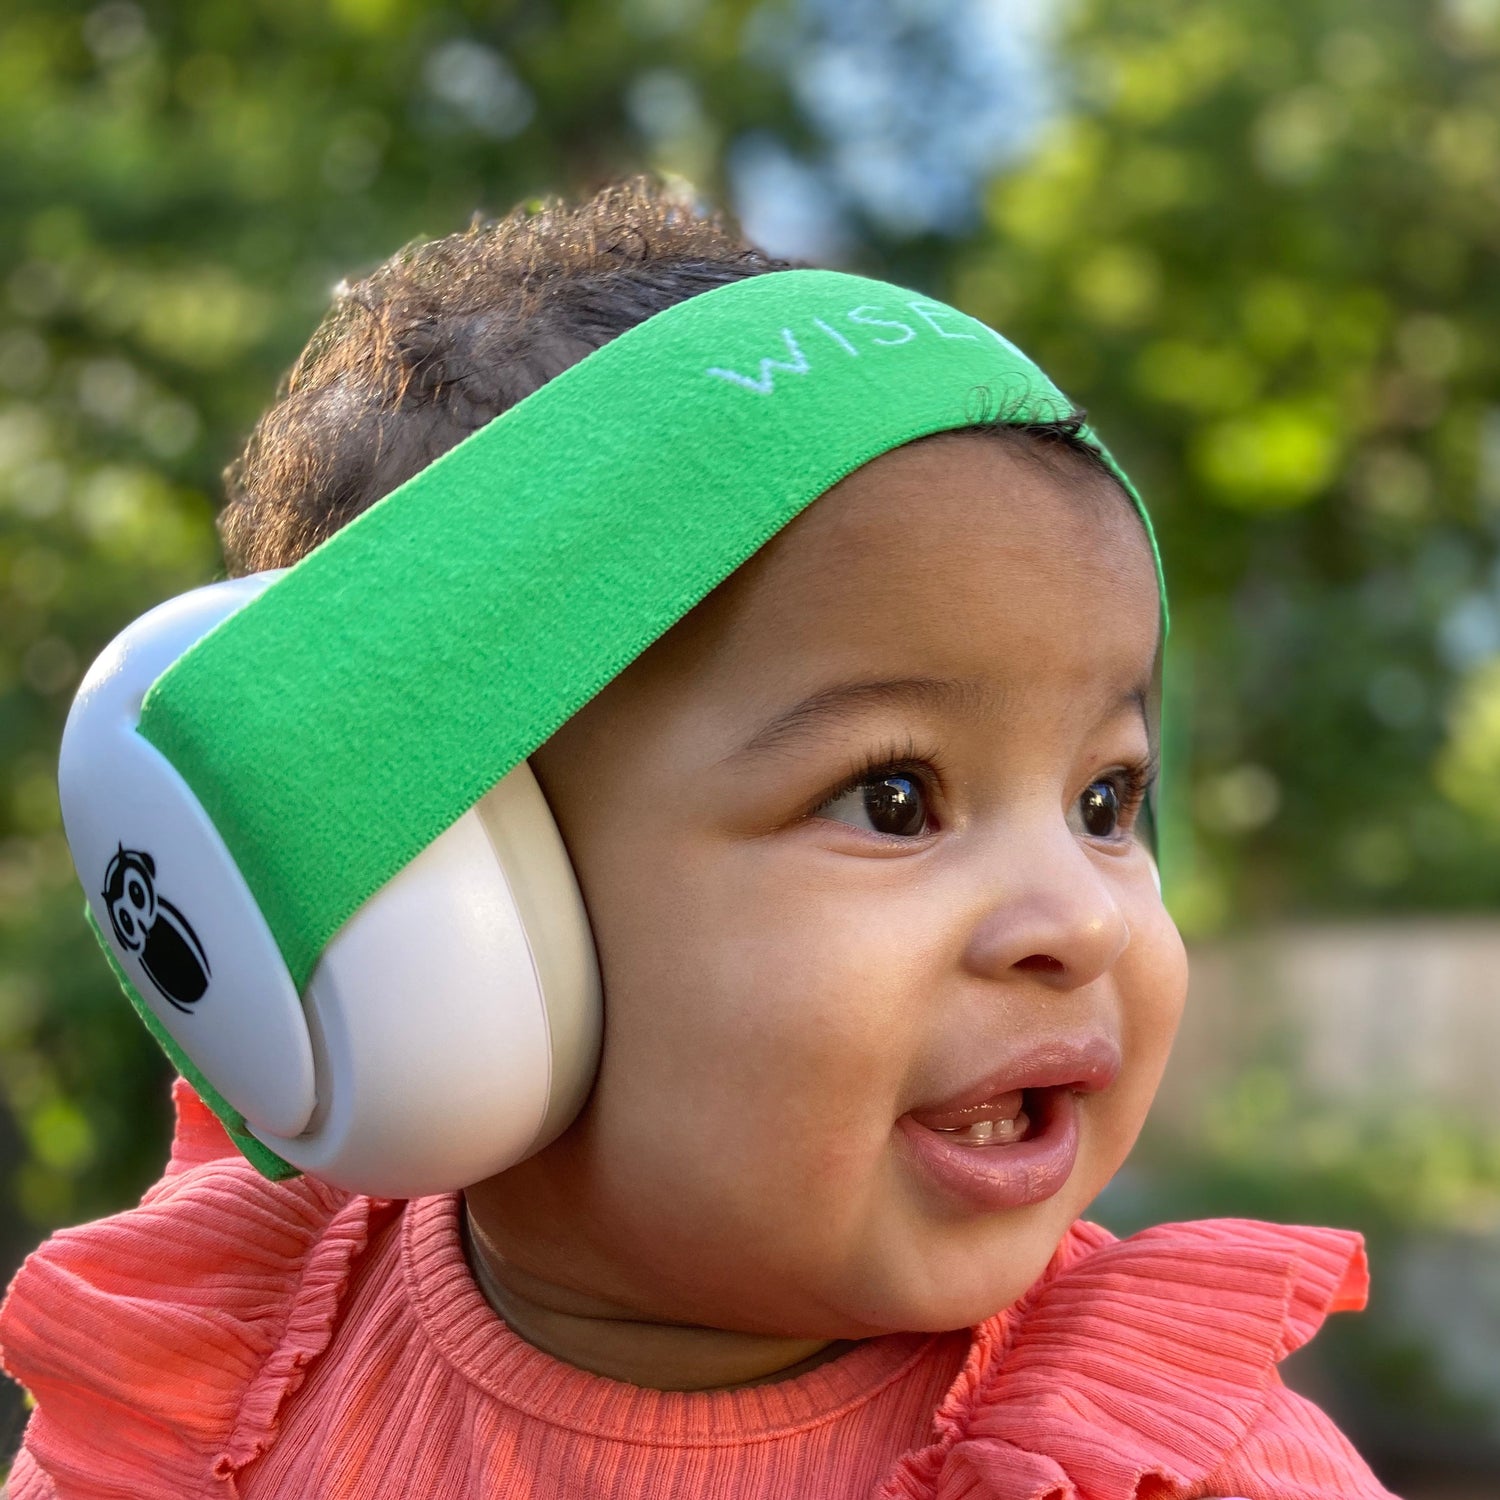 Children's Hearing Protection Earmuffs – Wise Little Ears